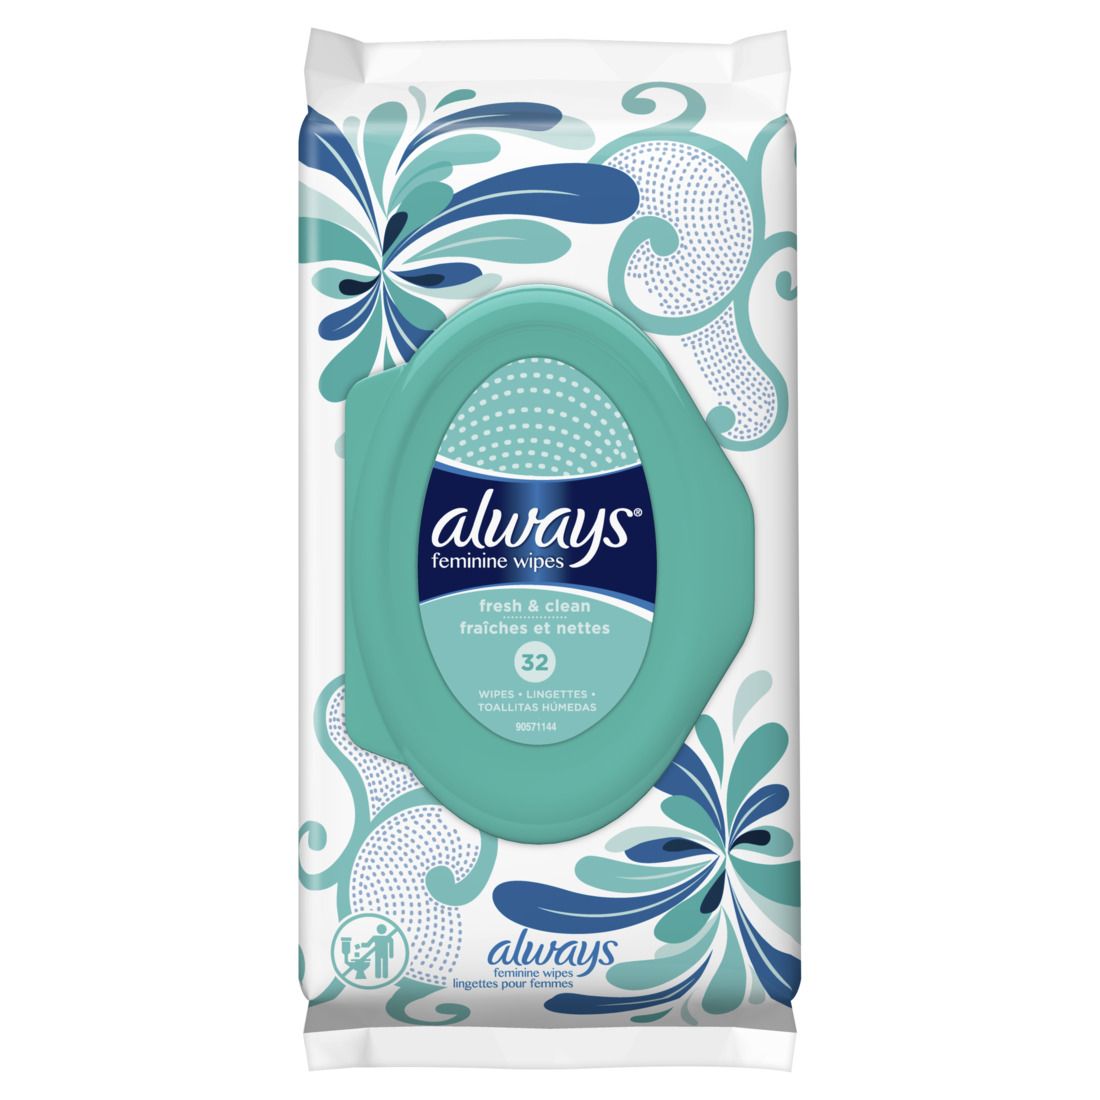 Always Feminine Wipes Fresh & Clean Soft Pack - 32ct/4pk